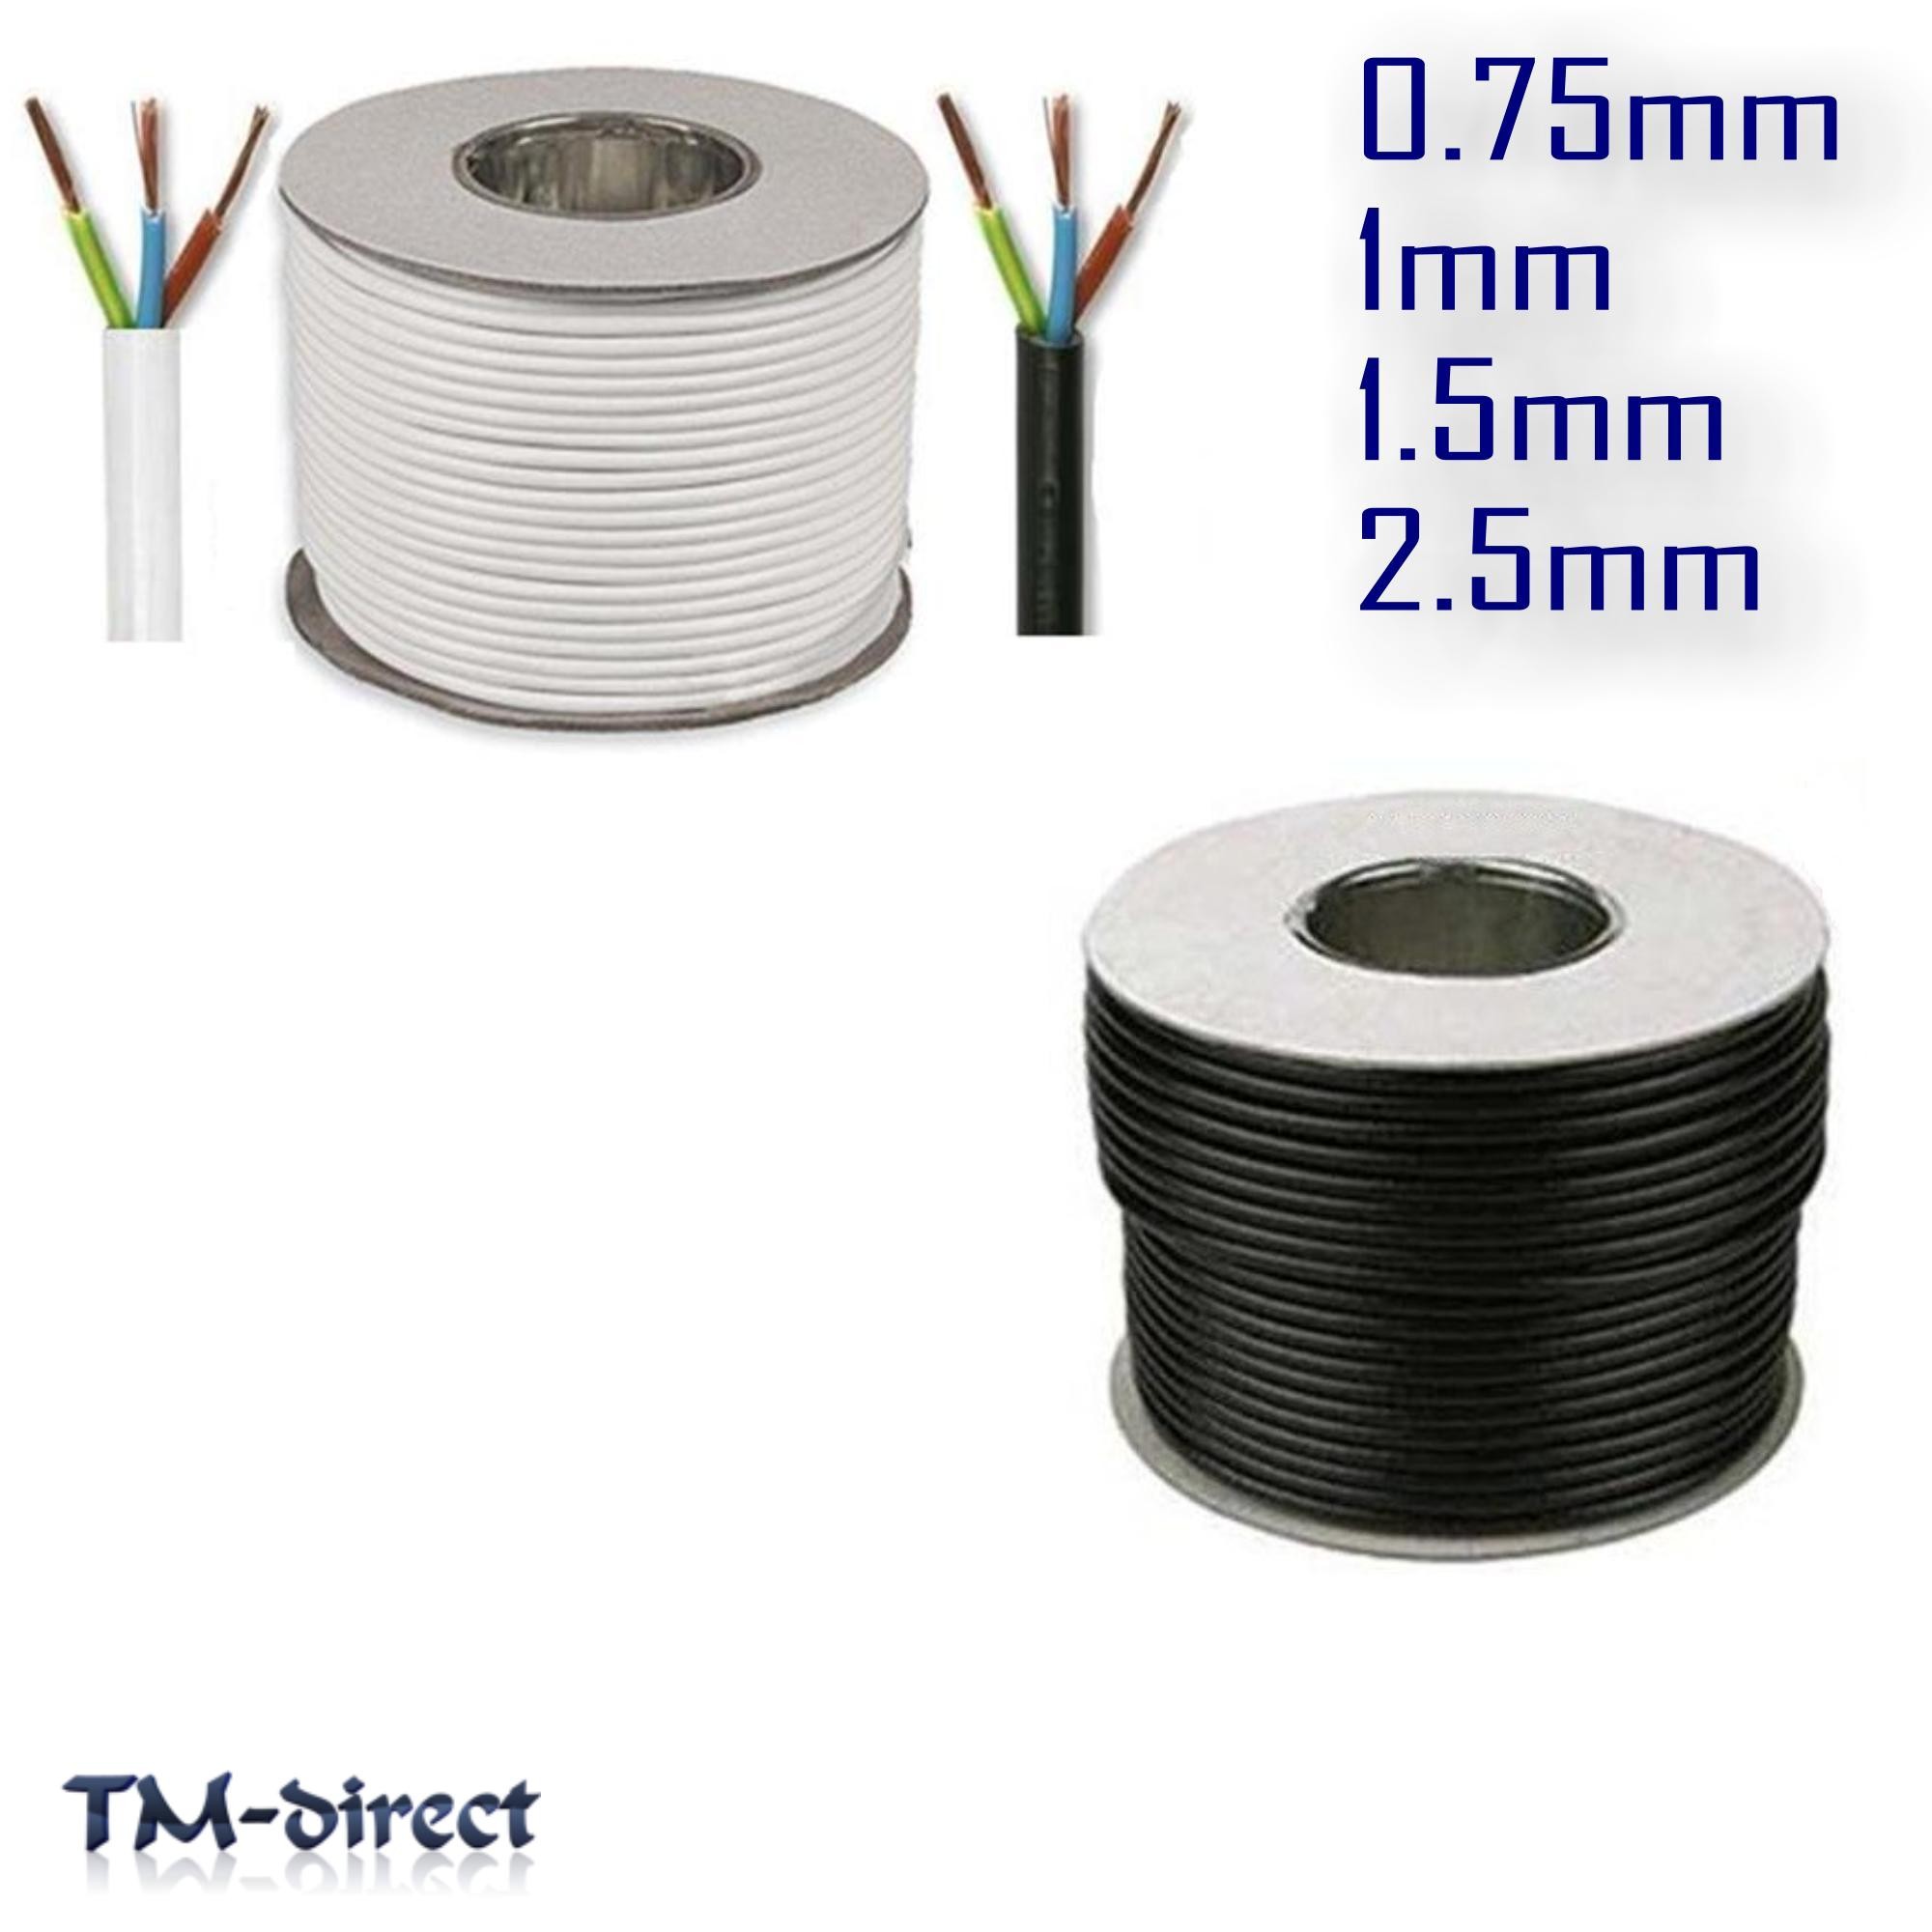 3 Core 2.5mm 25 Amp PVC Flexible Cable 1m 100m Round Flex Electrical Wire BLACK